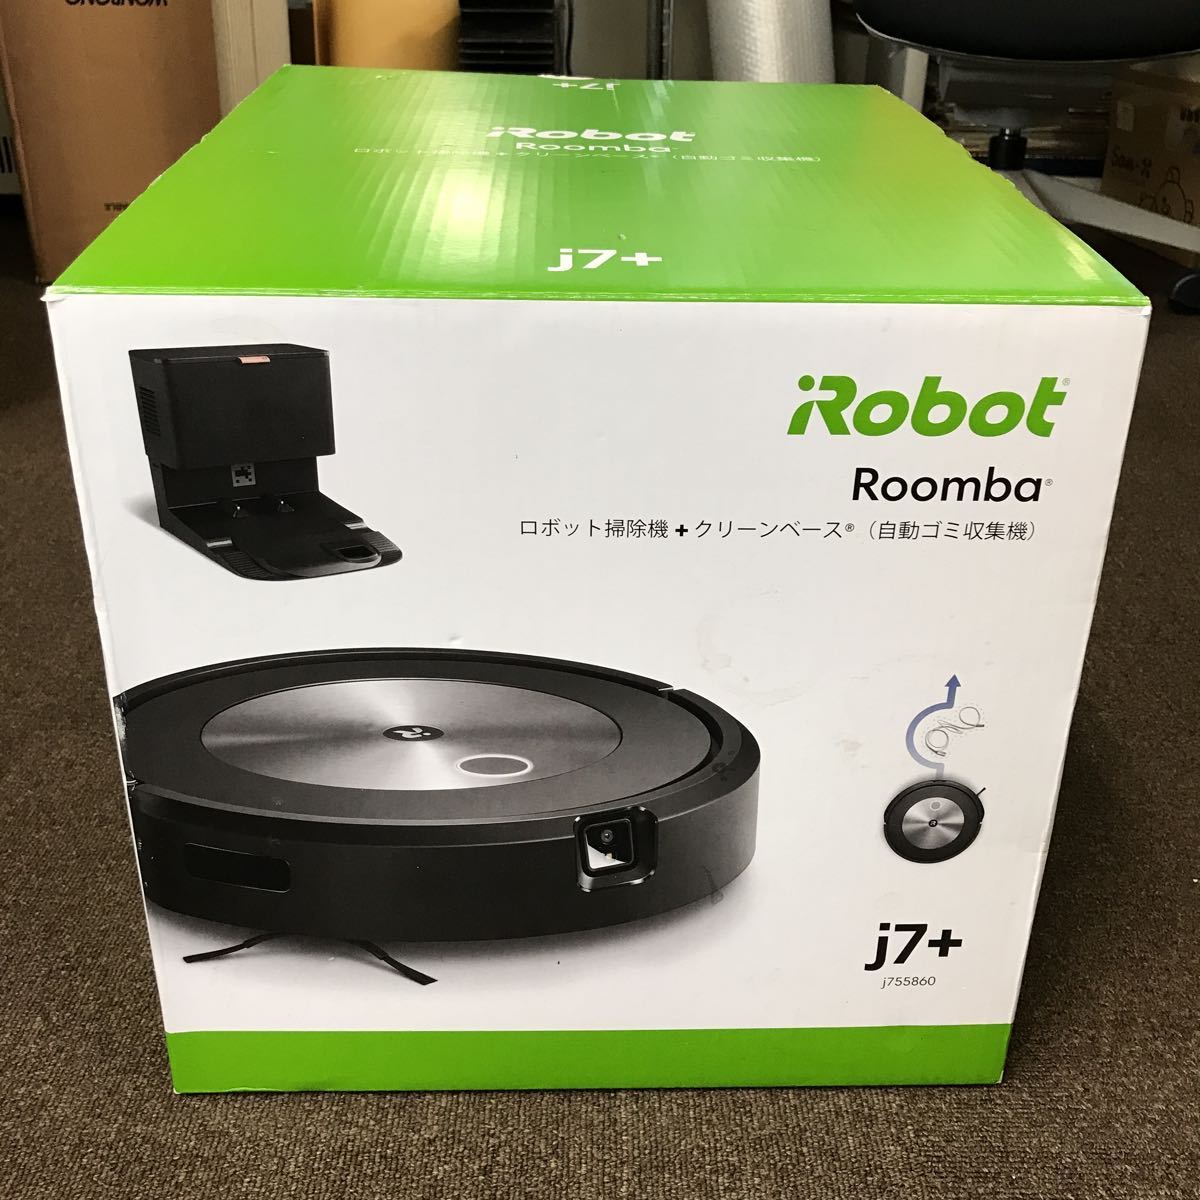 ○iRobot ルンバj7+/ロボット掃除機/アイロボットJ755860－日本代購代 